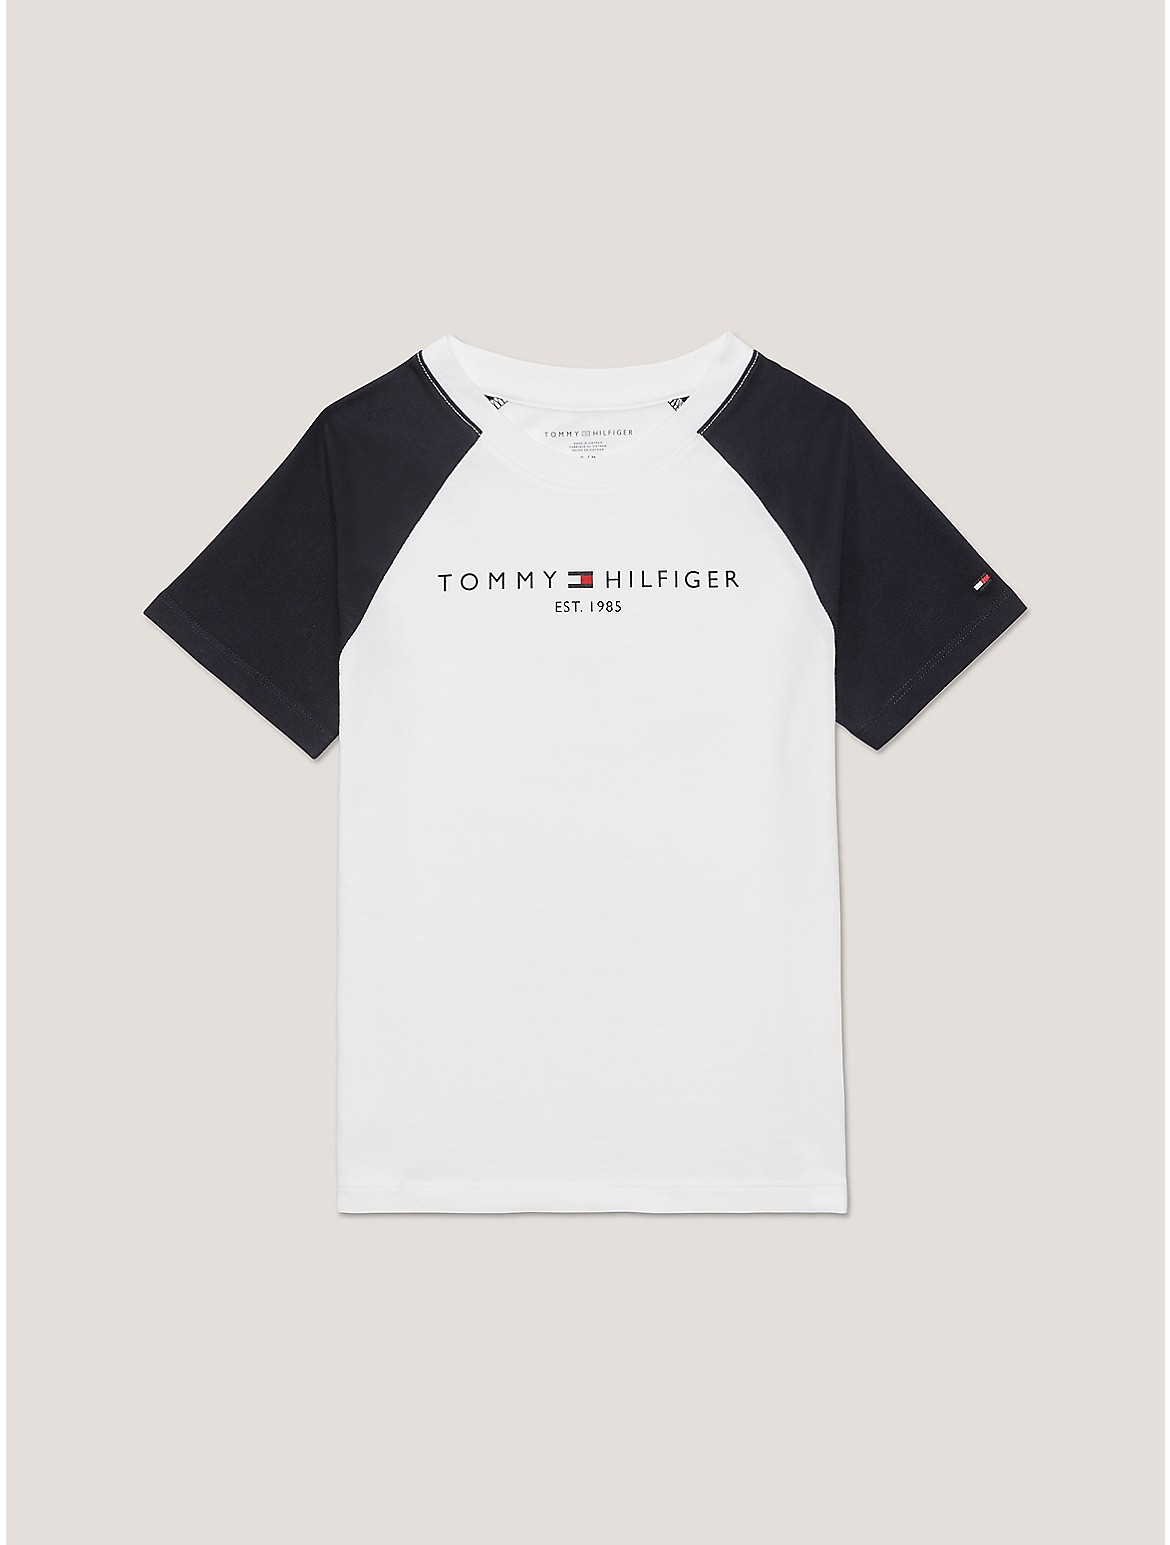 Tommy Hilfiger Boys' Kids' Baseball T-Shirt - White - M